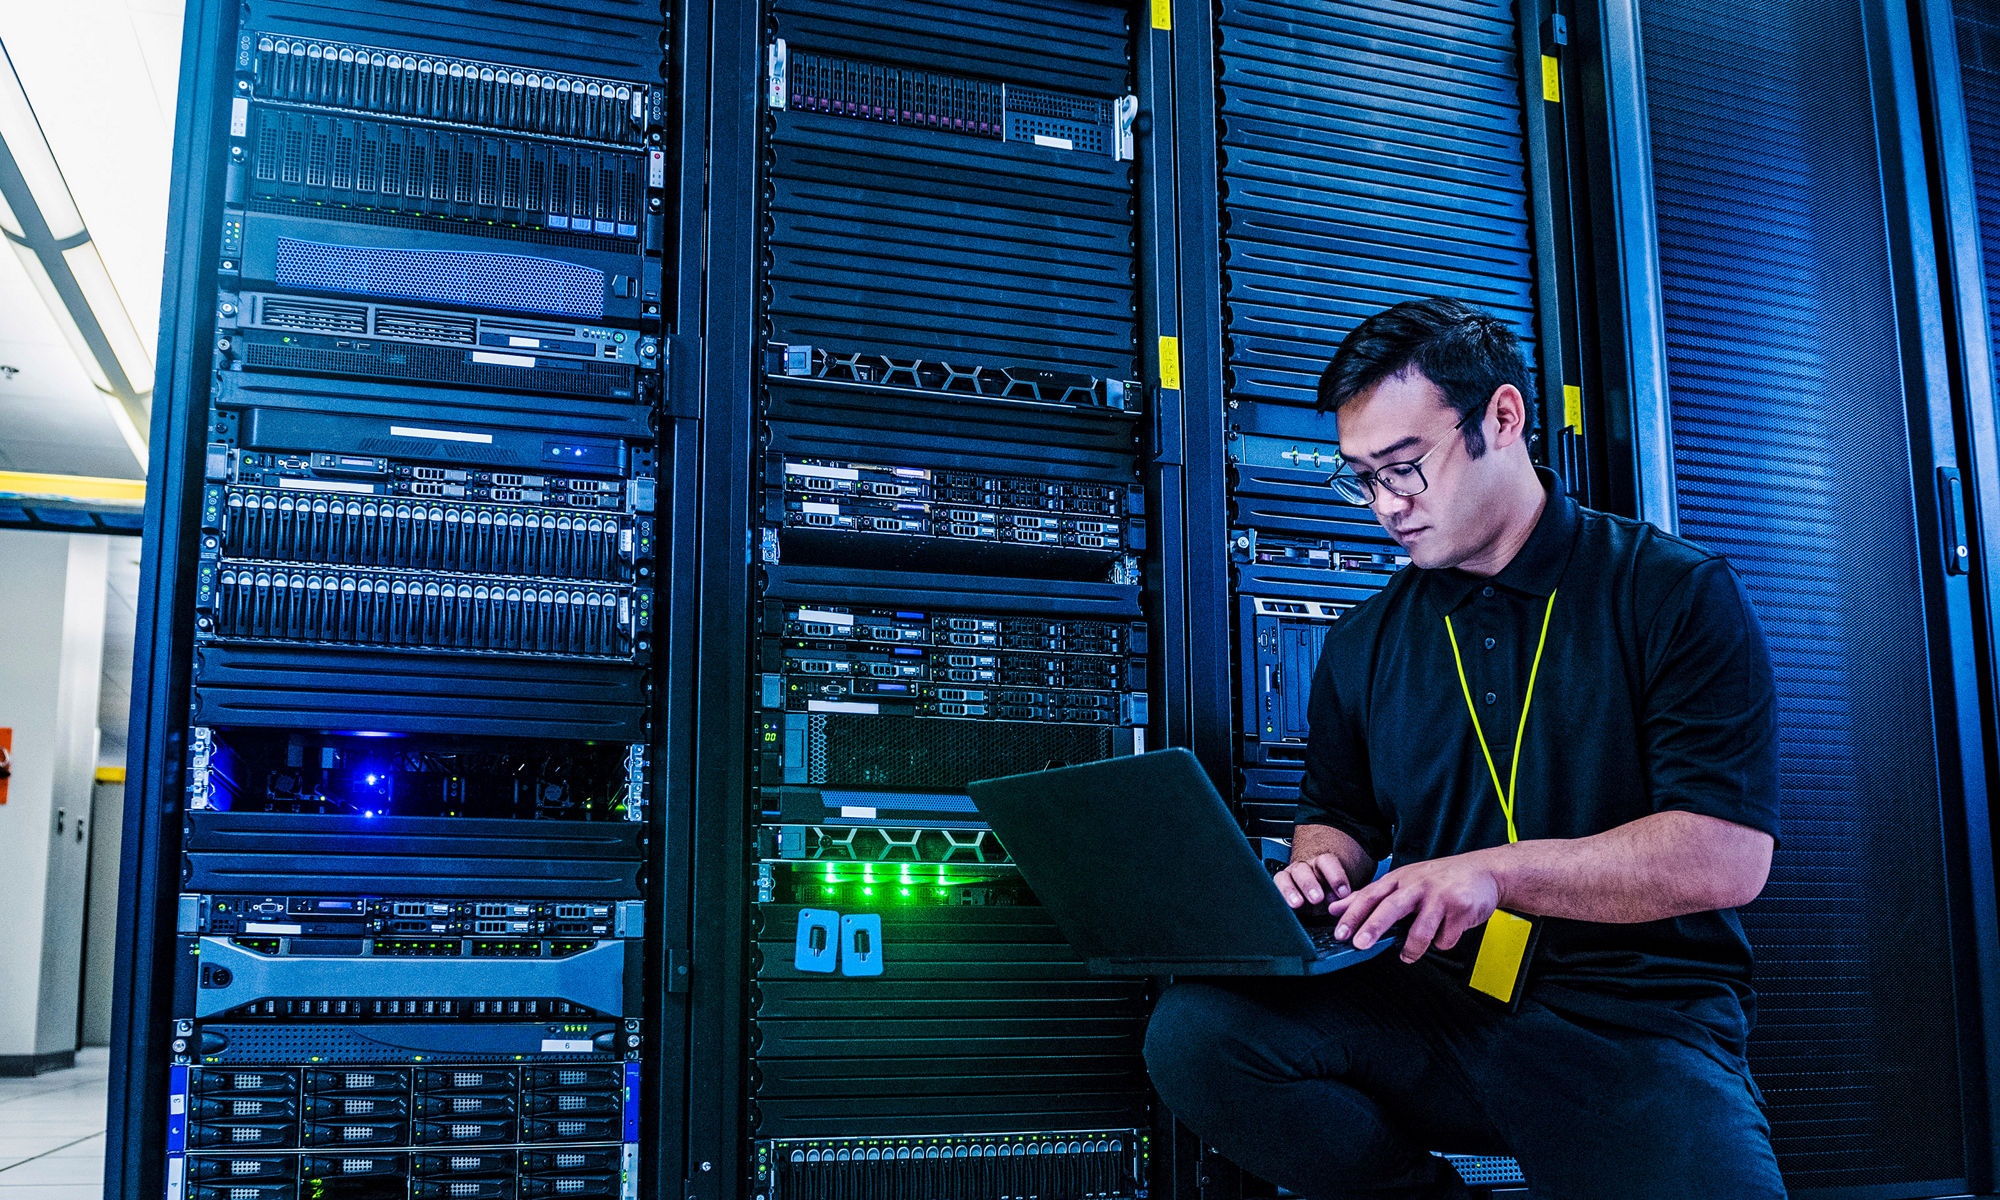 Employee working on server rack in data center